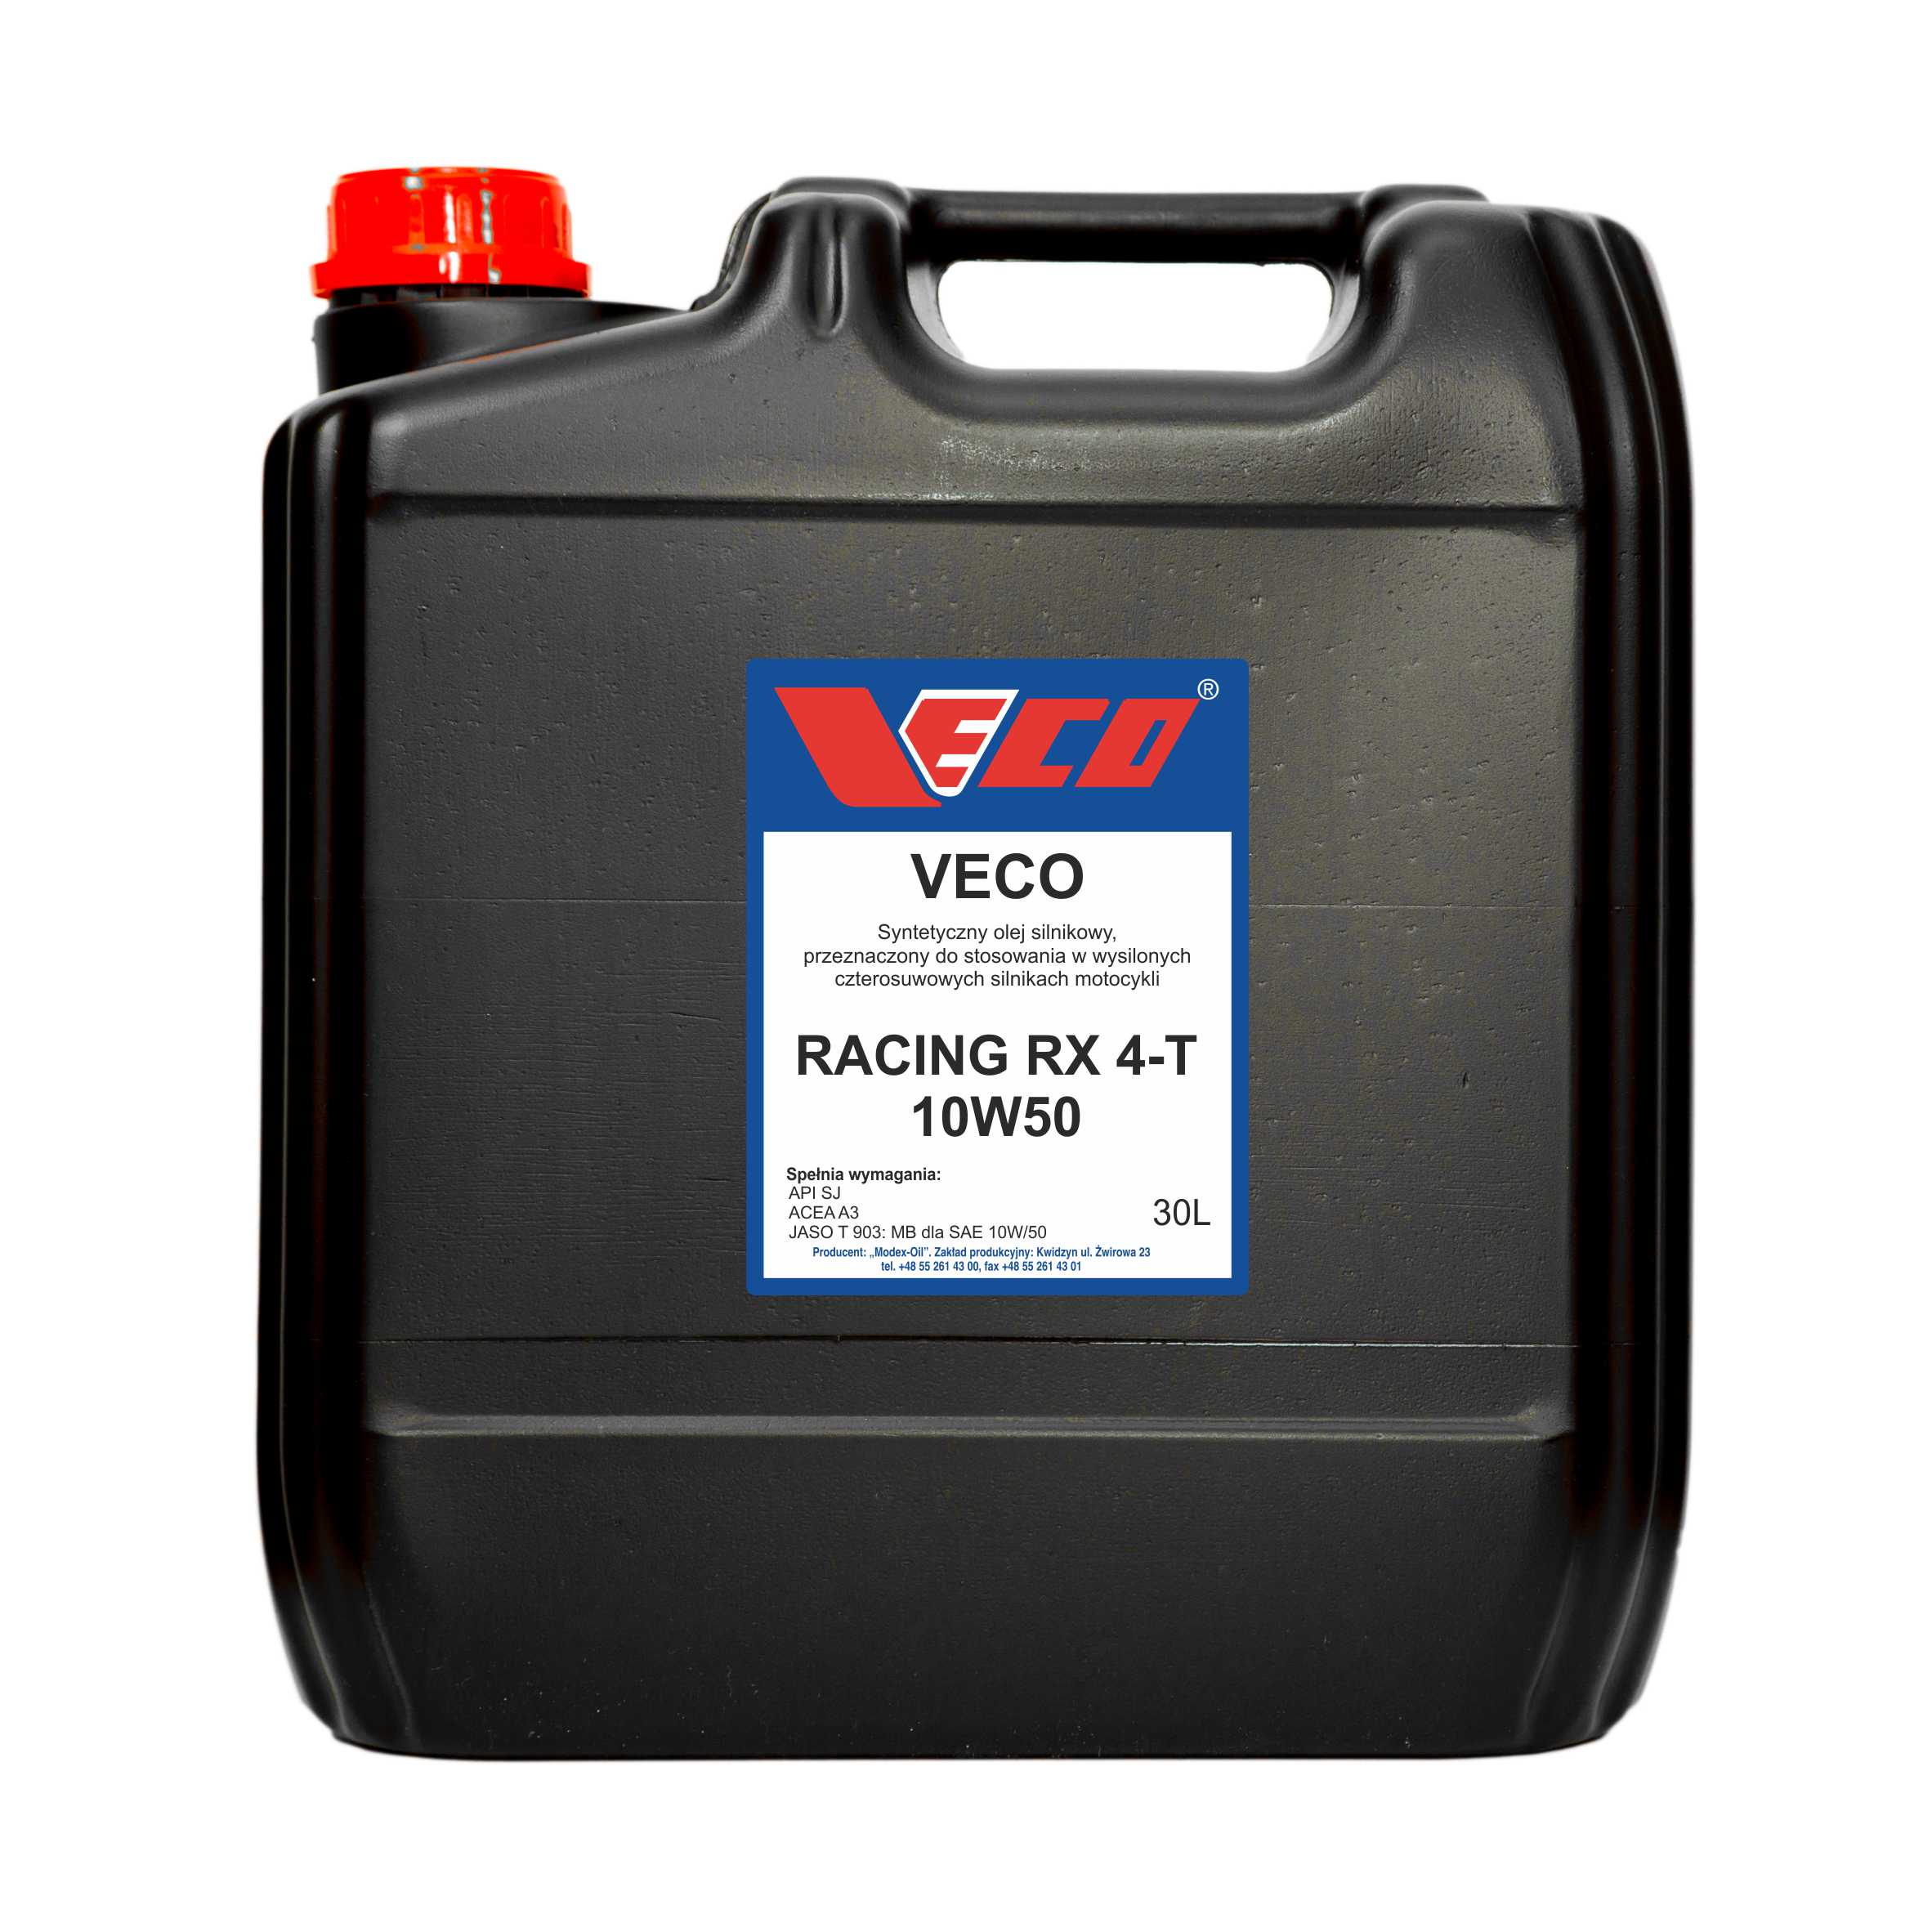 VECO RACING RX 4-T 10W50 opak. 30l